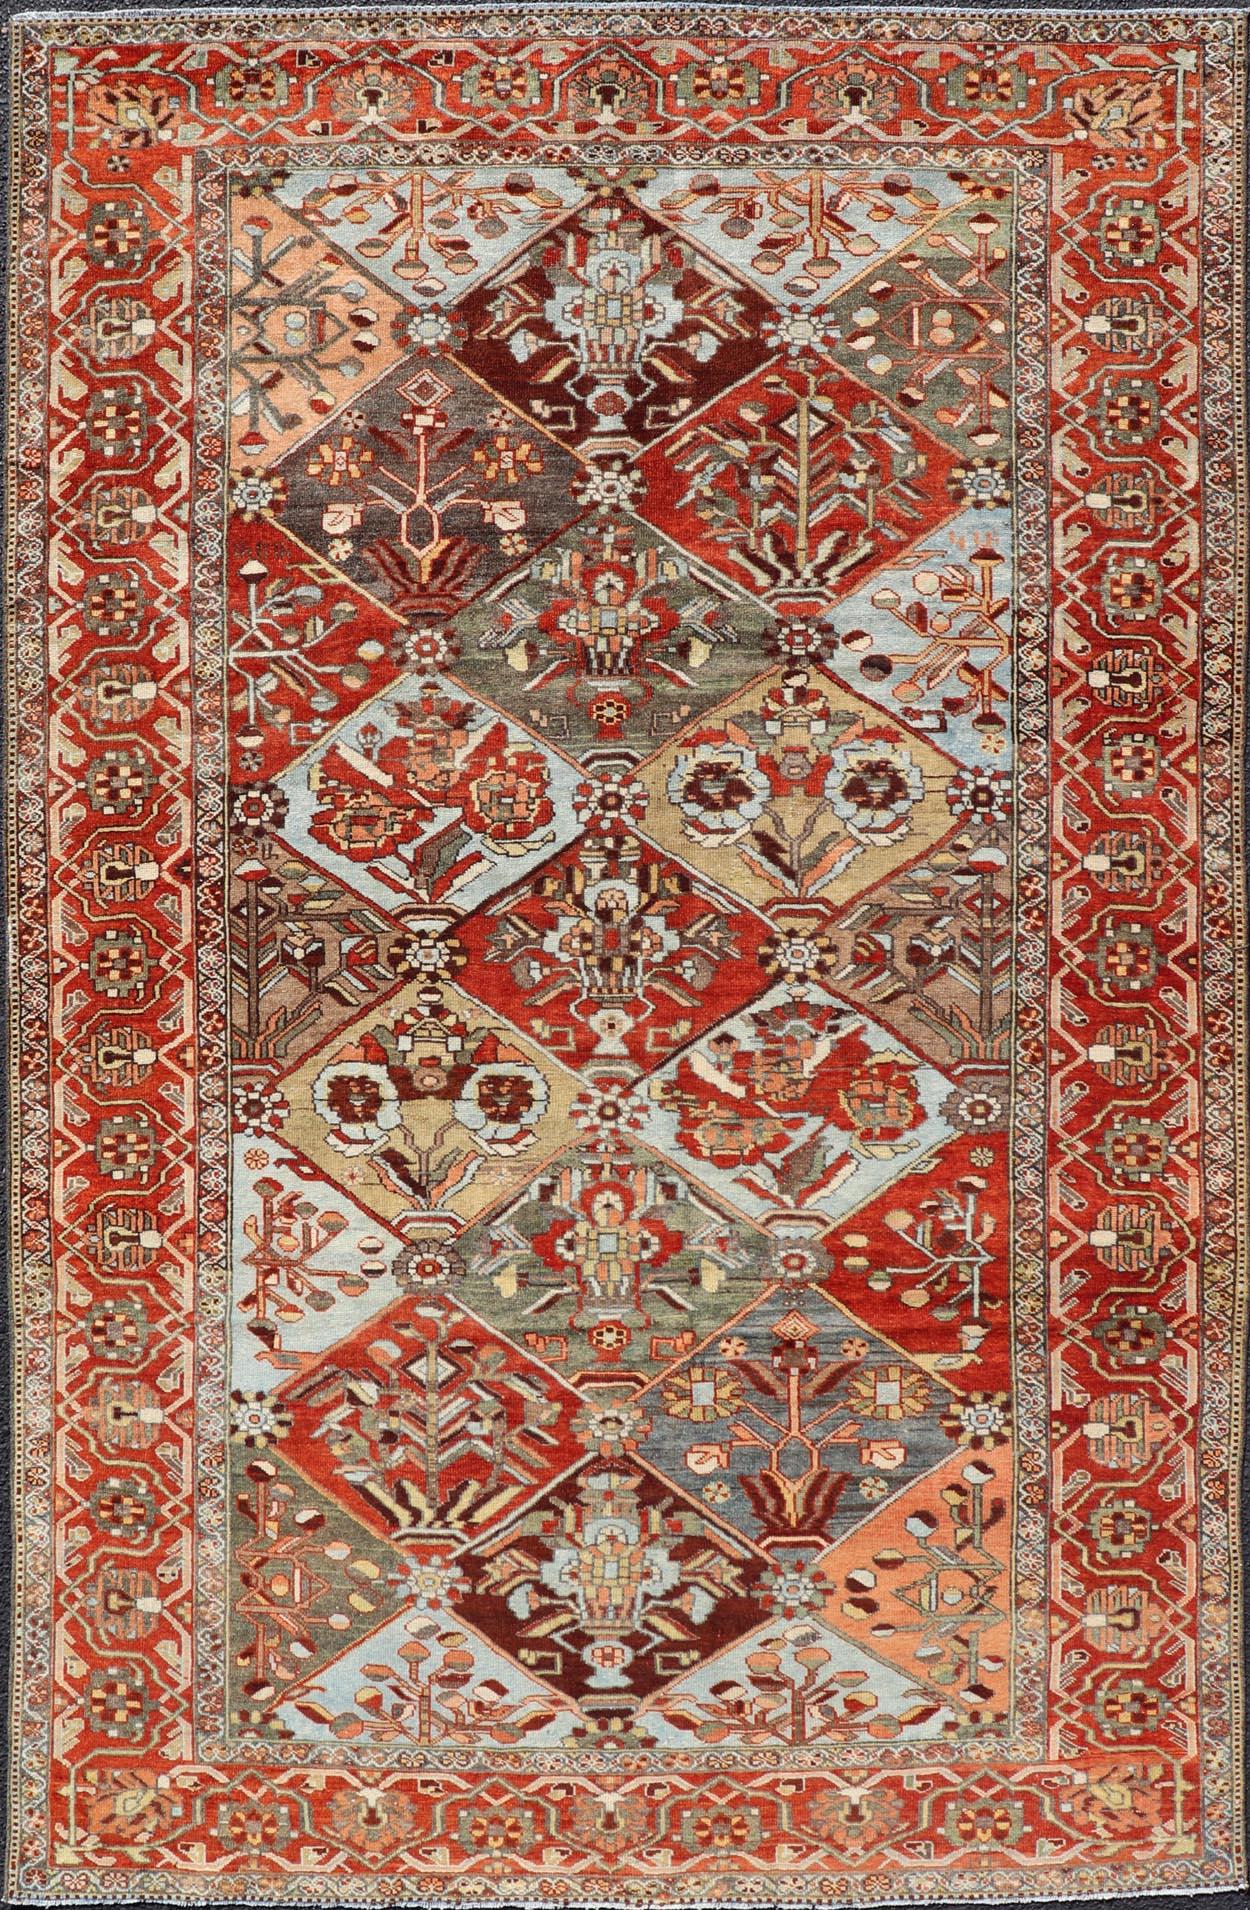 Antique Persian Bakhitari Colorful Rug in All-Over Diamond Garden Design  For Sale